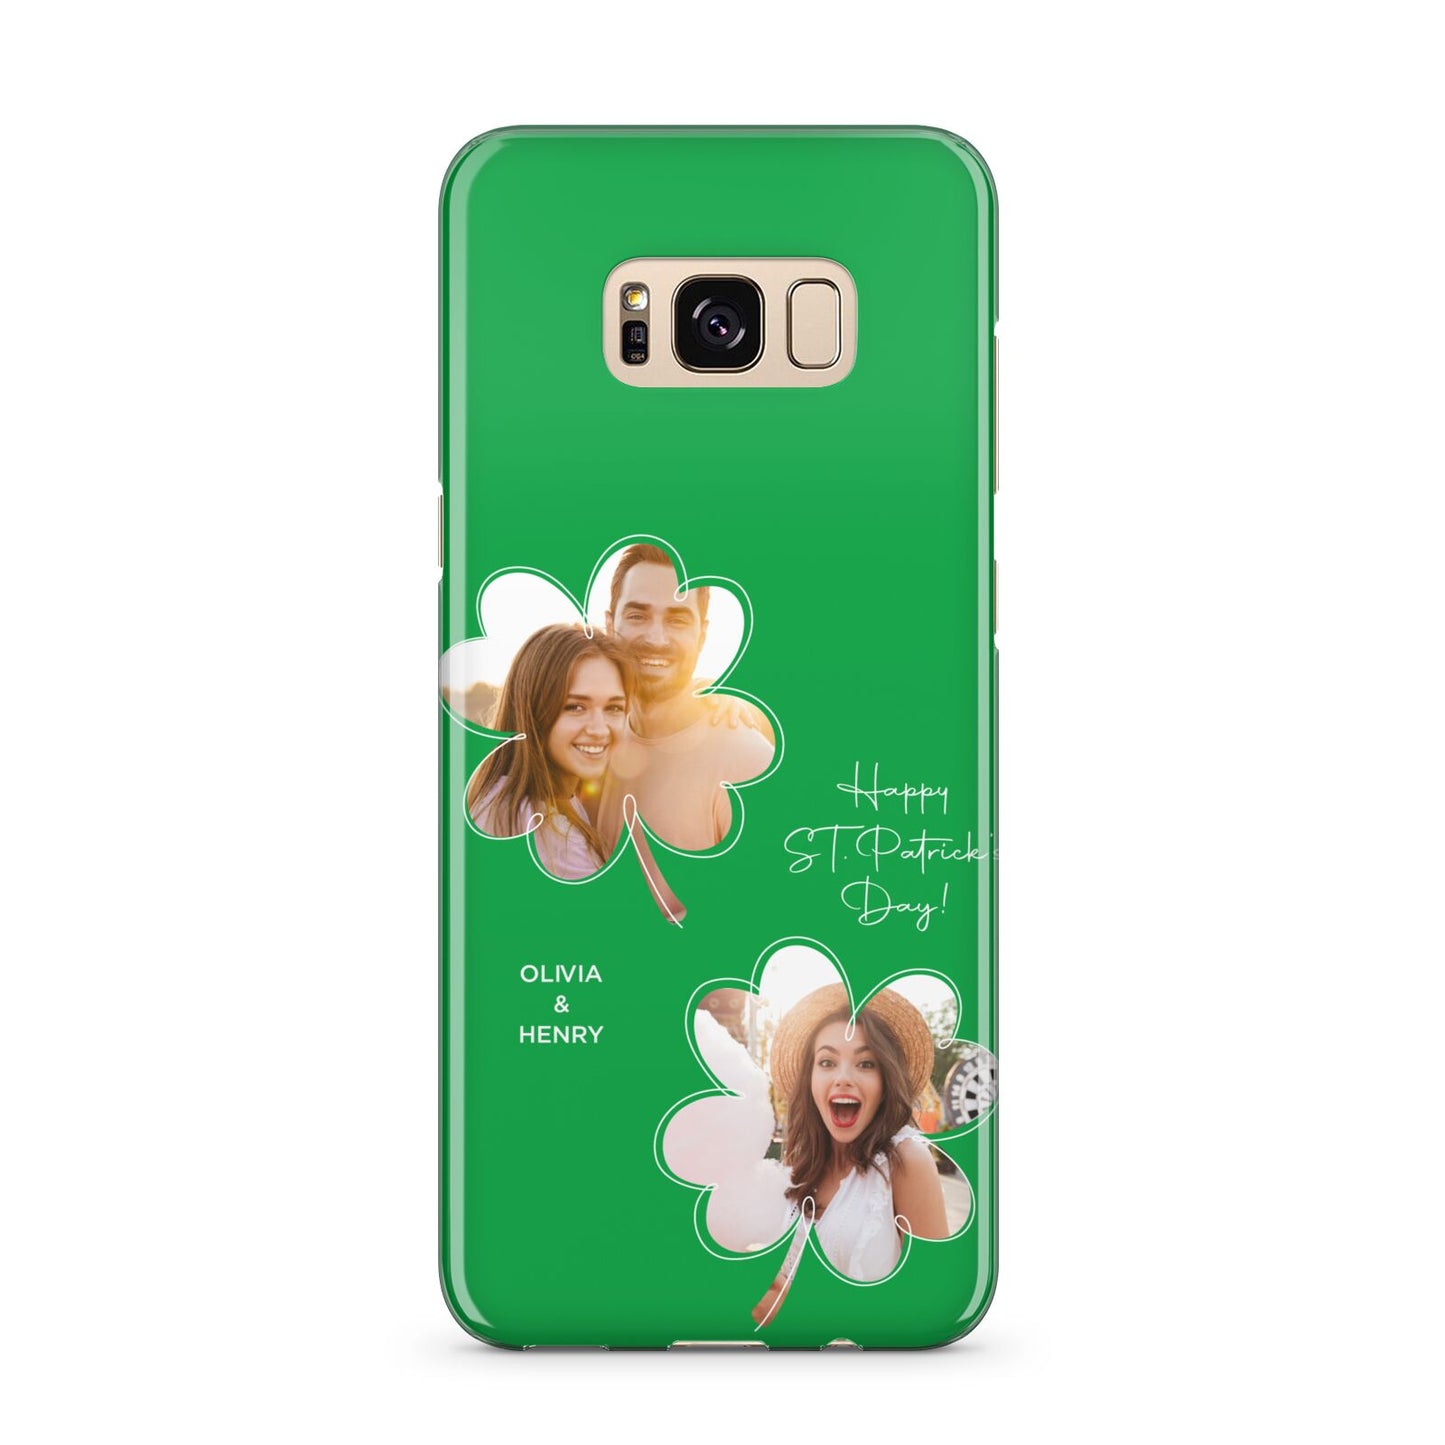 Personalised Photo St Patricks Day Samsung Galaxy S8 Plus Case